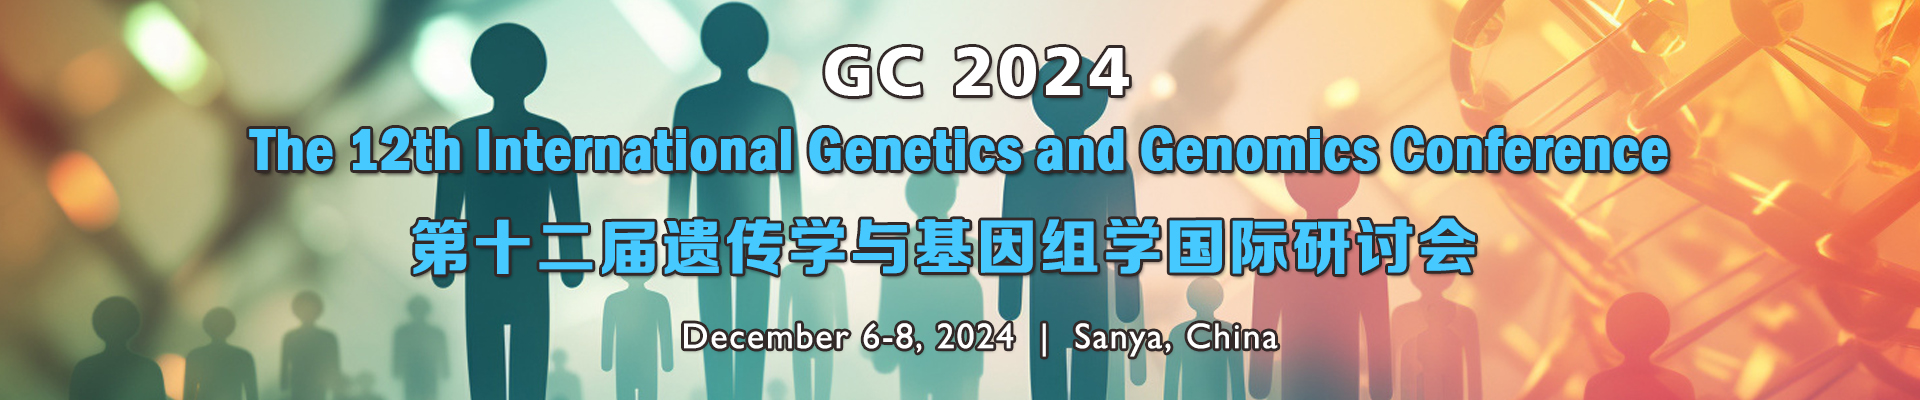 The 12th International Genetics and Genomics Conference (GC 2024), Sanya, Hainan, China